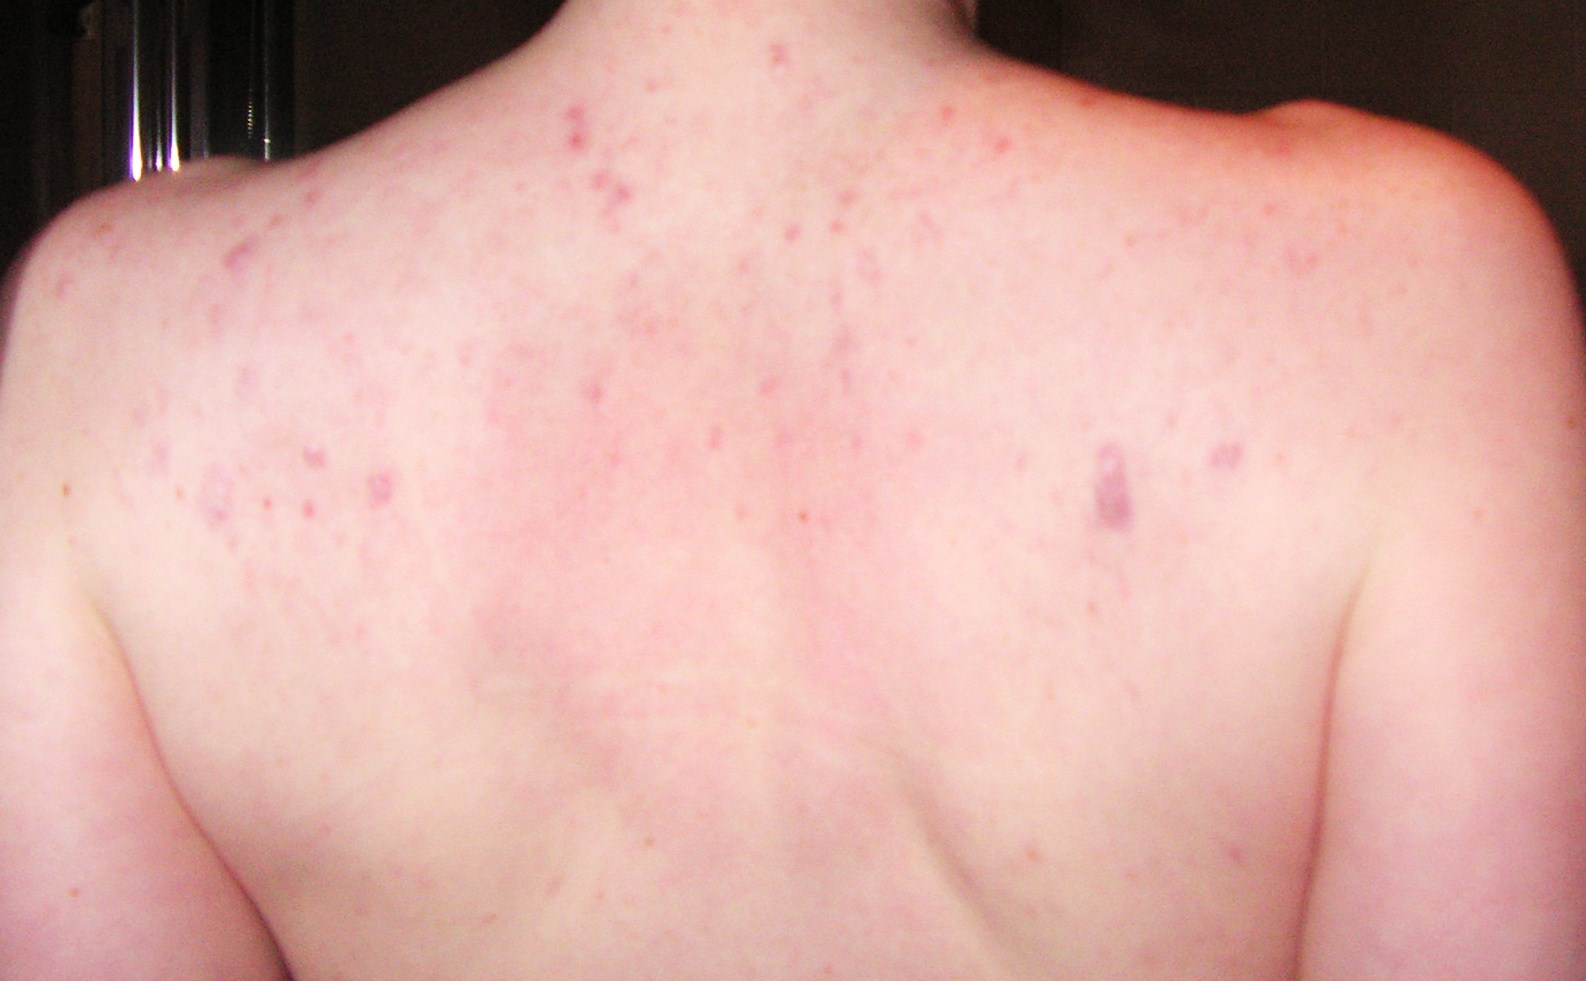 Moderate/severe back acne regimen log - The Acne.org Regimen logs